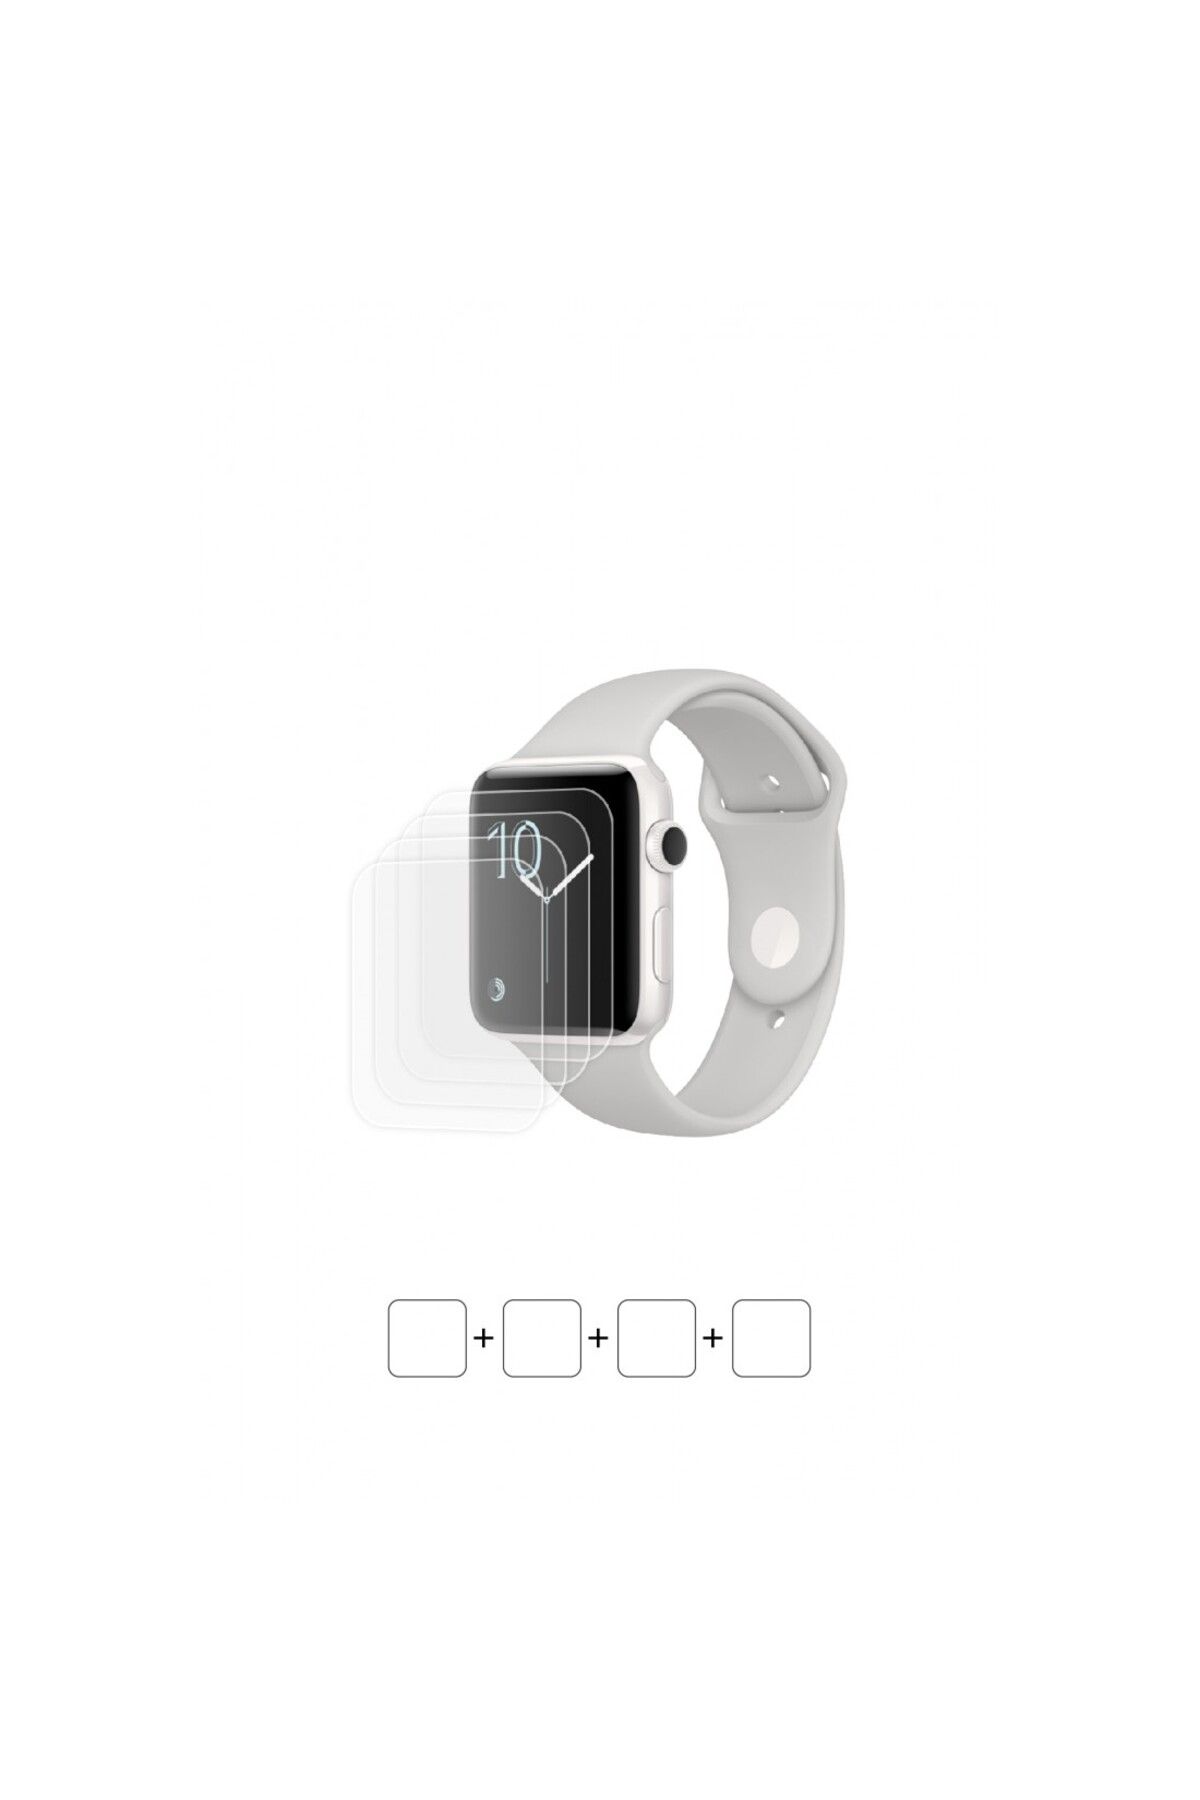 Wrapsol Apple Watch Edition Series 2 42 mm Akıllı Saat Ekran Koruyucu Poliüretan Film